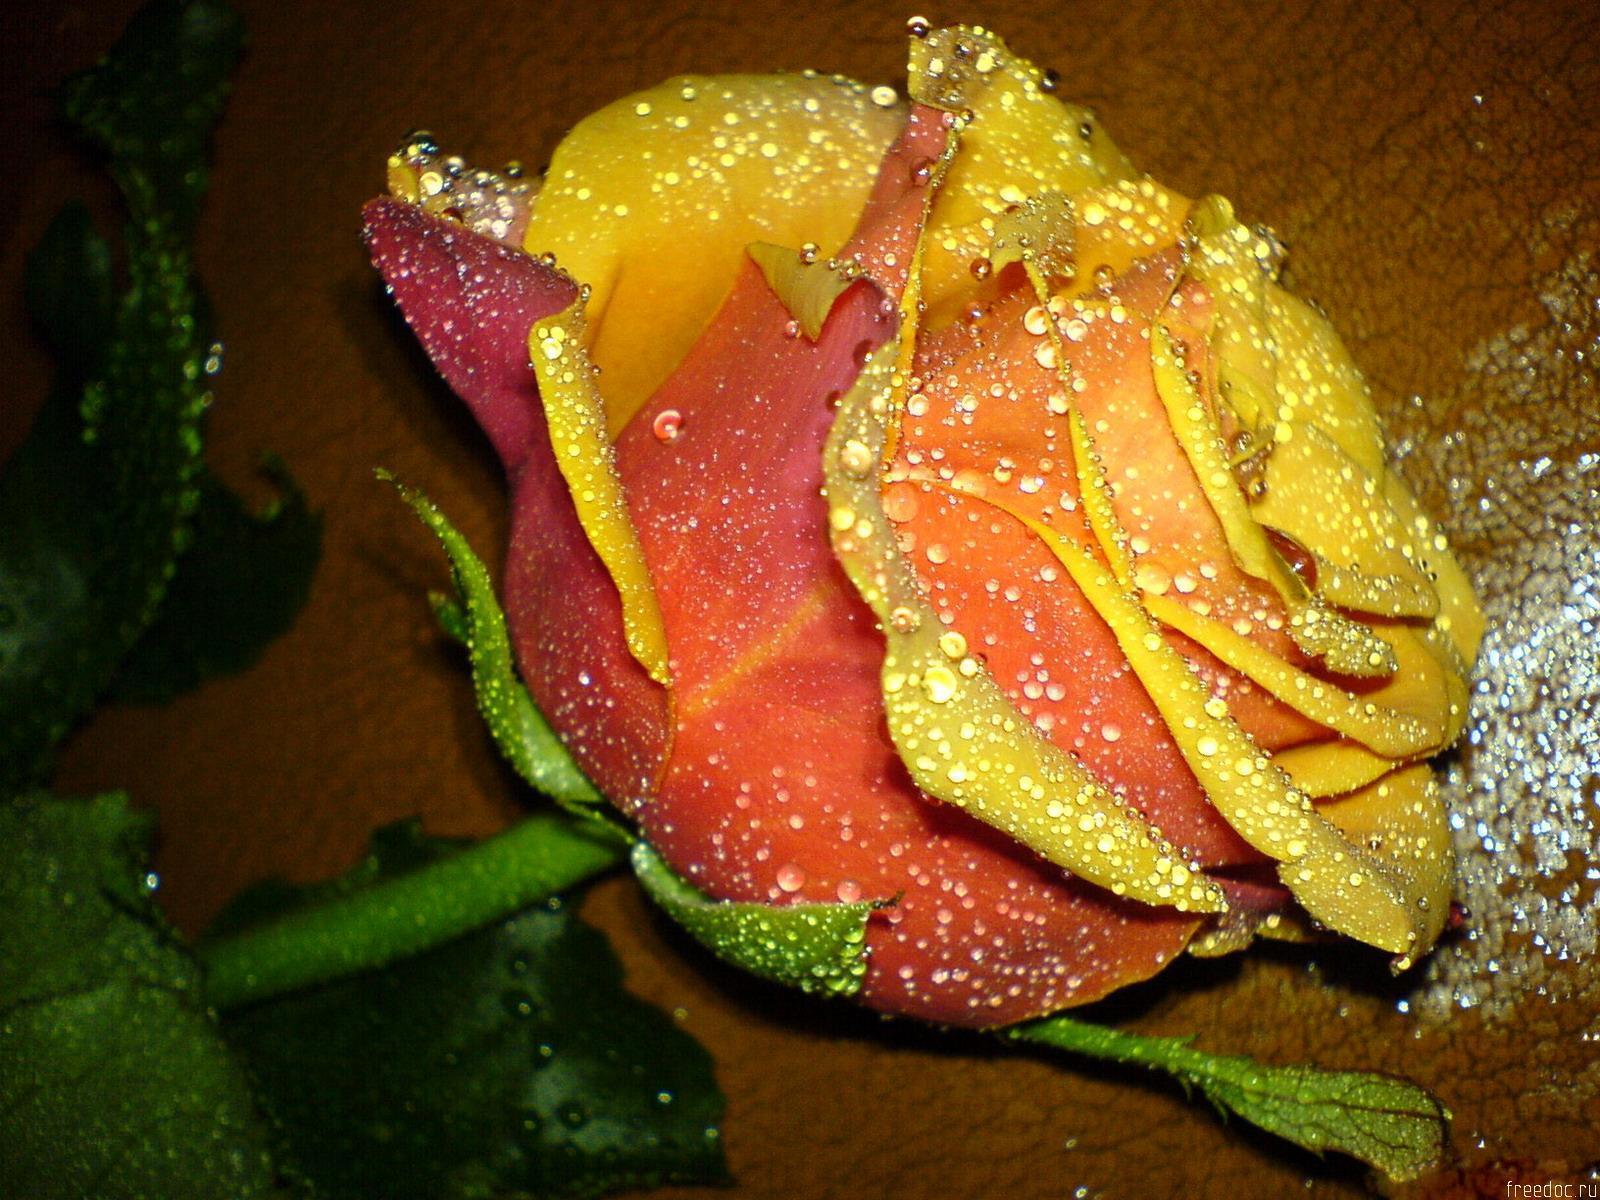 Flowers For > Beautiful Rose Wallpaper For Desktop